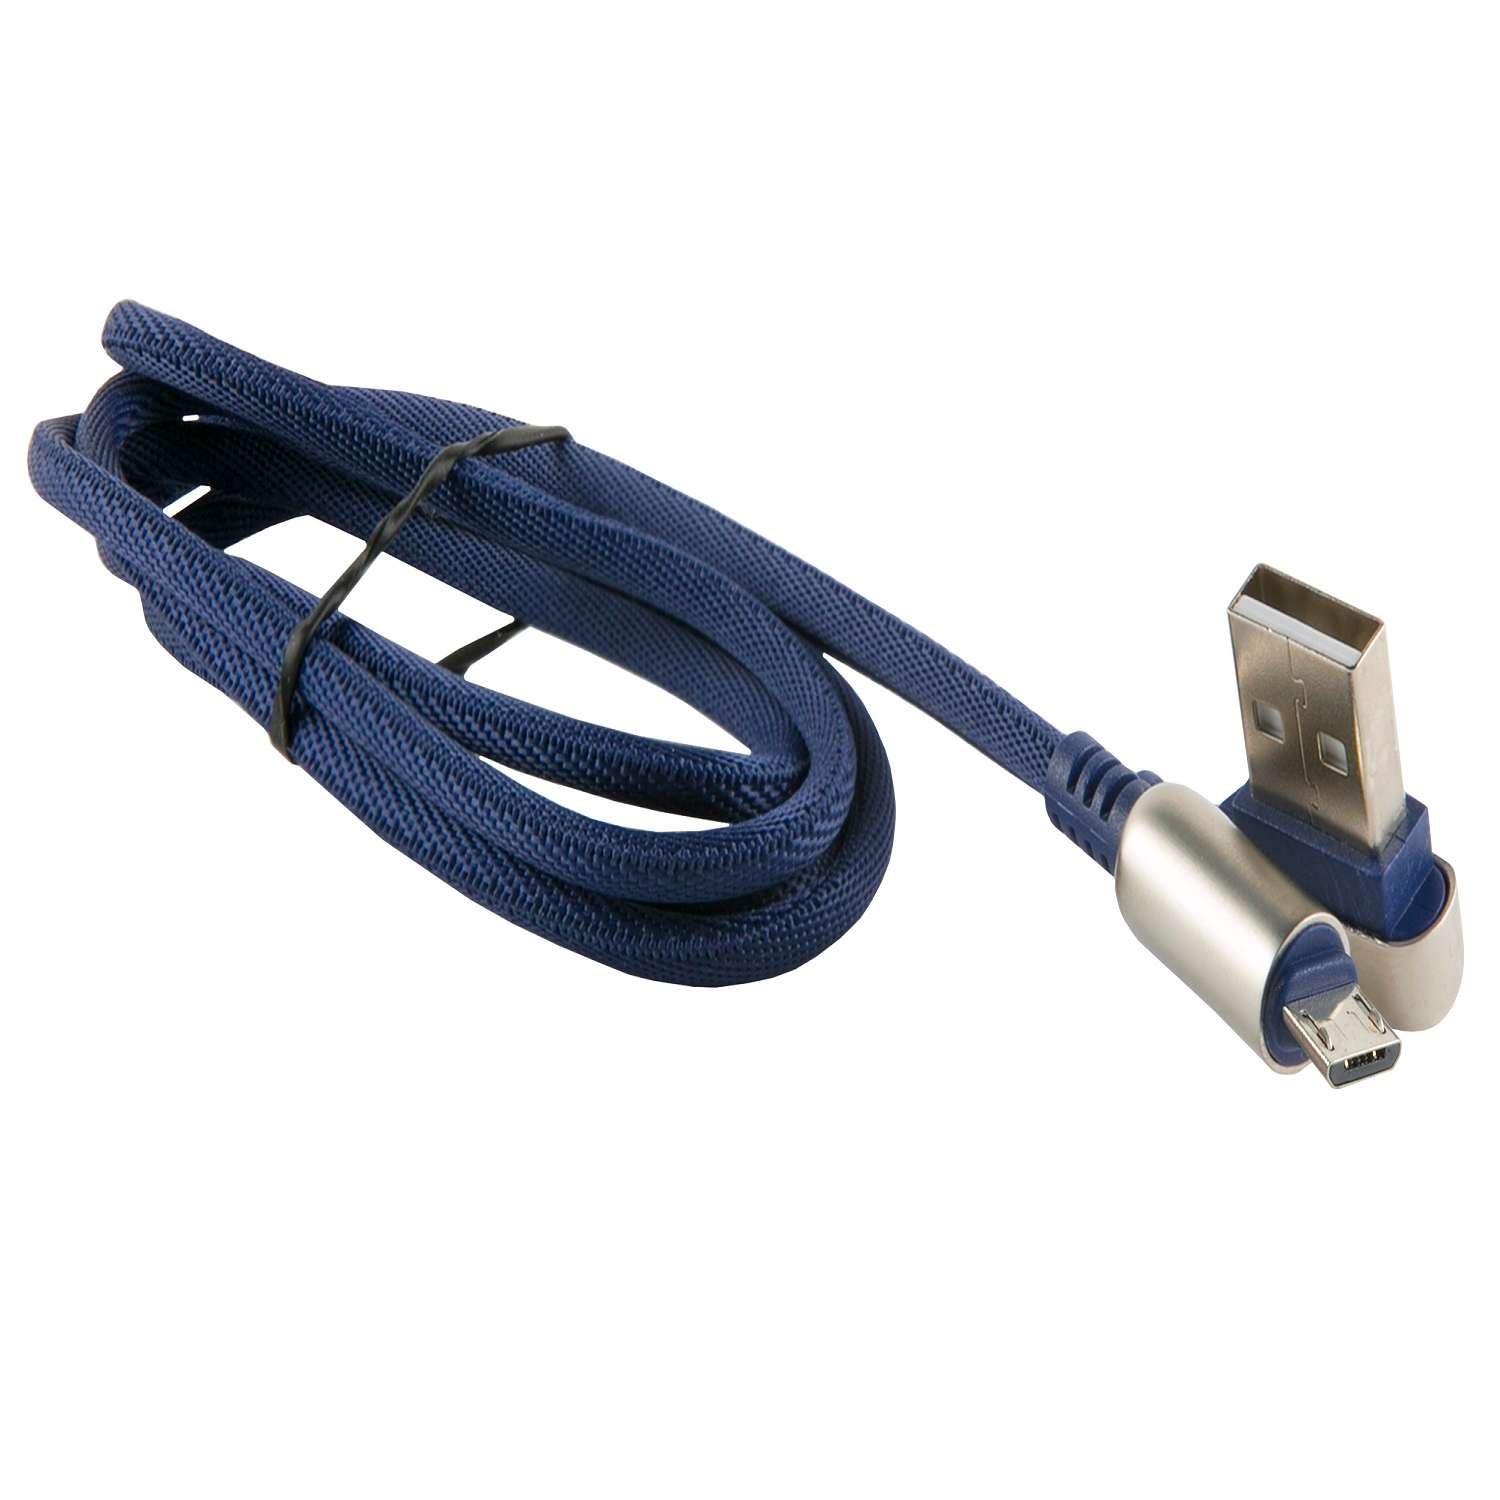 Кабель red line. Red line кабель fishnet синий. Кабель Red line Smart High Speed USB to MICROUSB синий. Молния голубая РБГ.